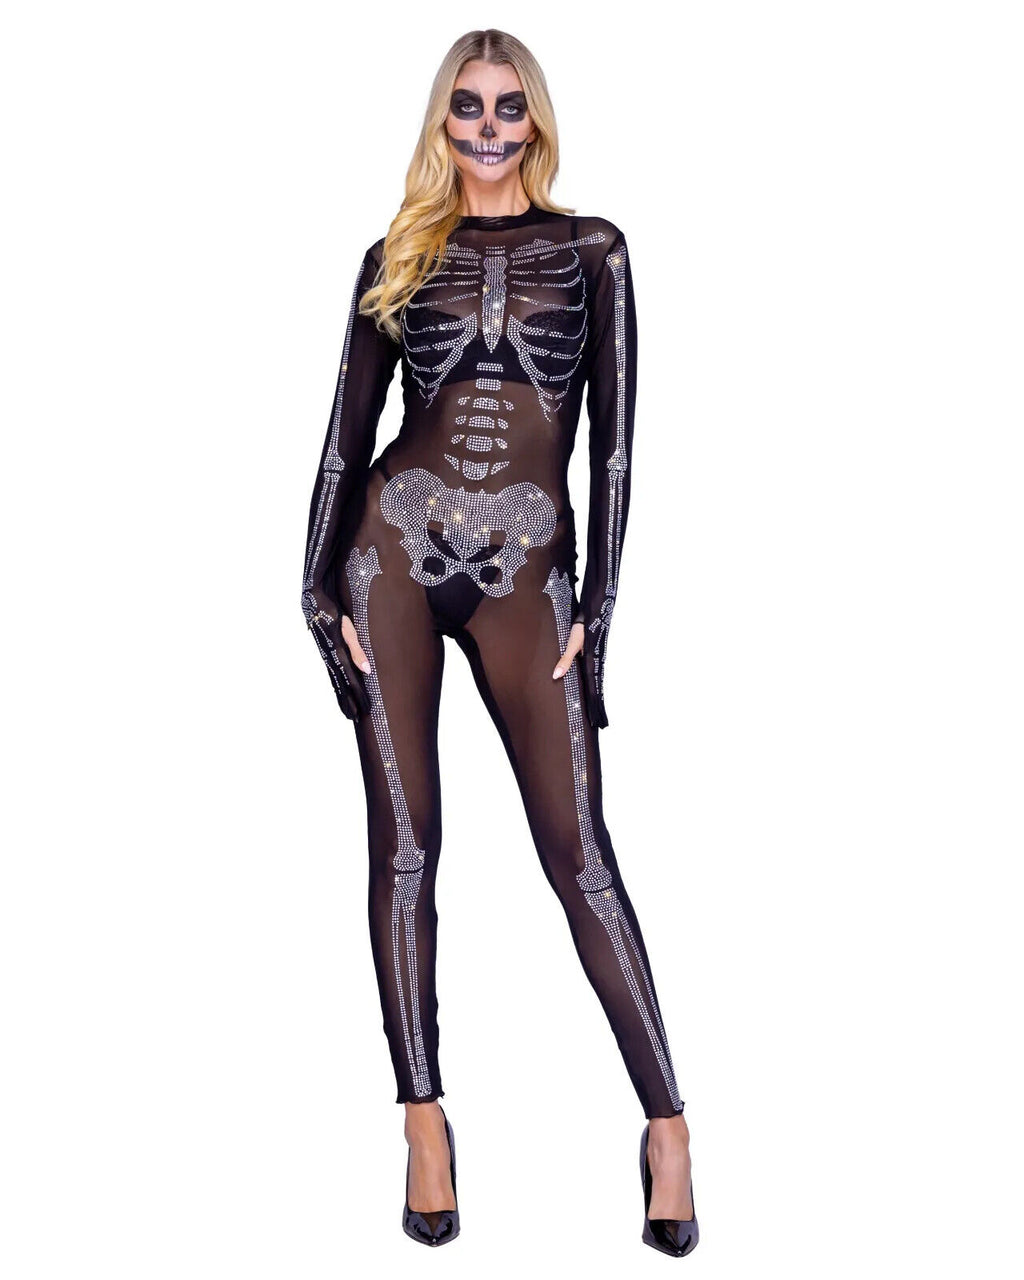 Roma Sparkling Skeleton Sheer Jumpsuit Costume 6378